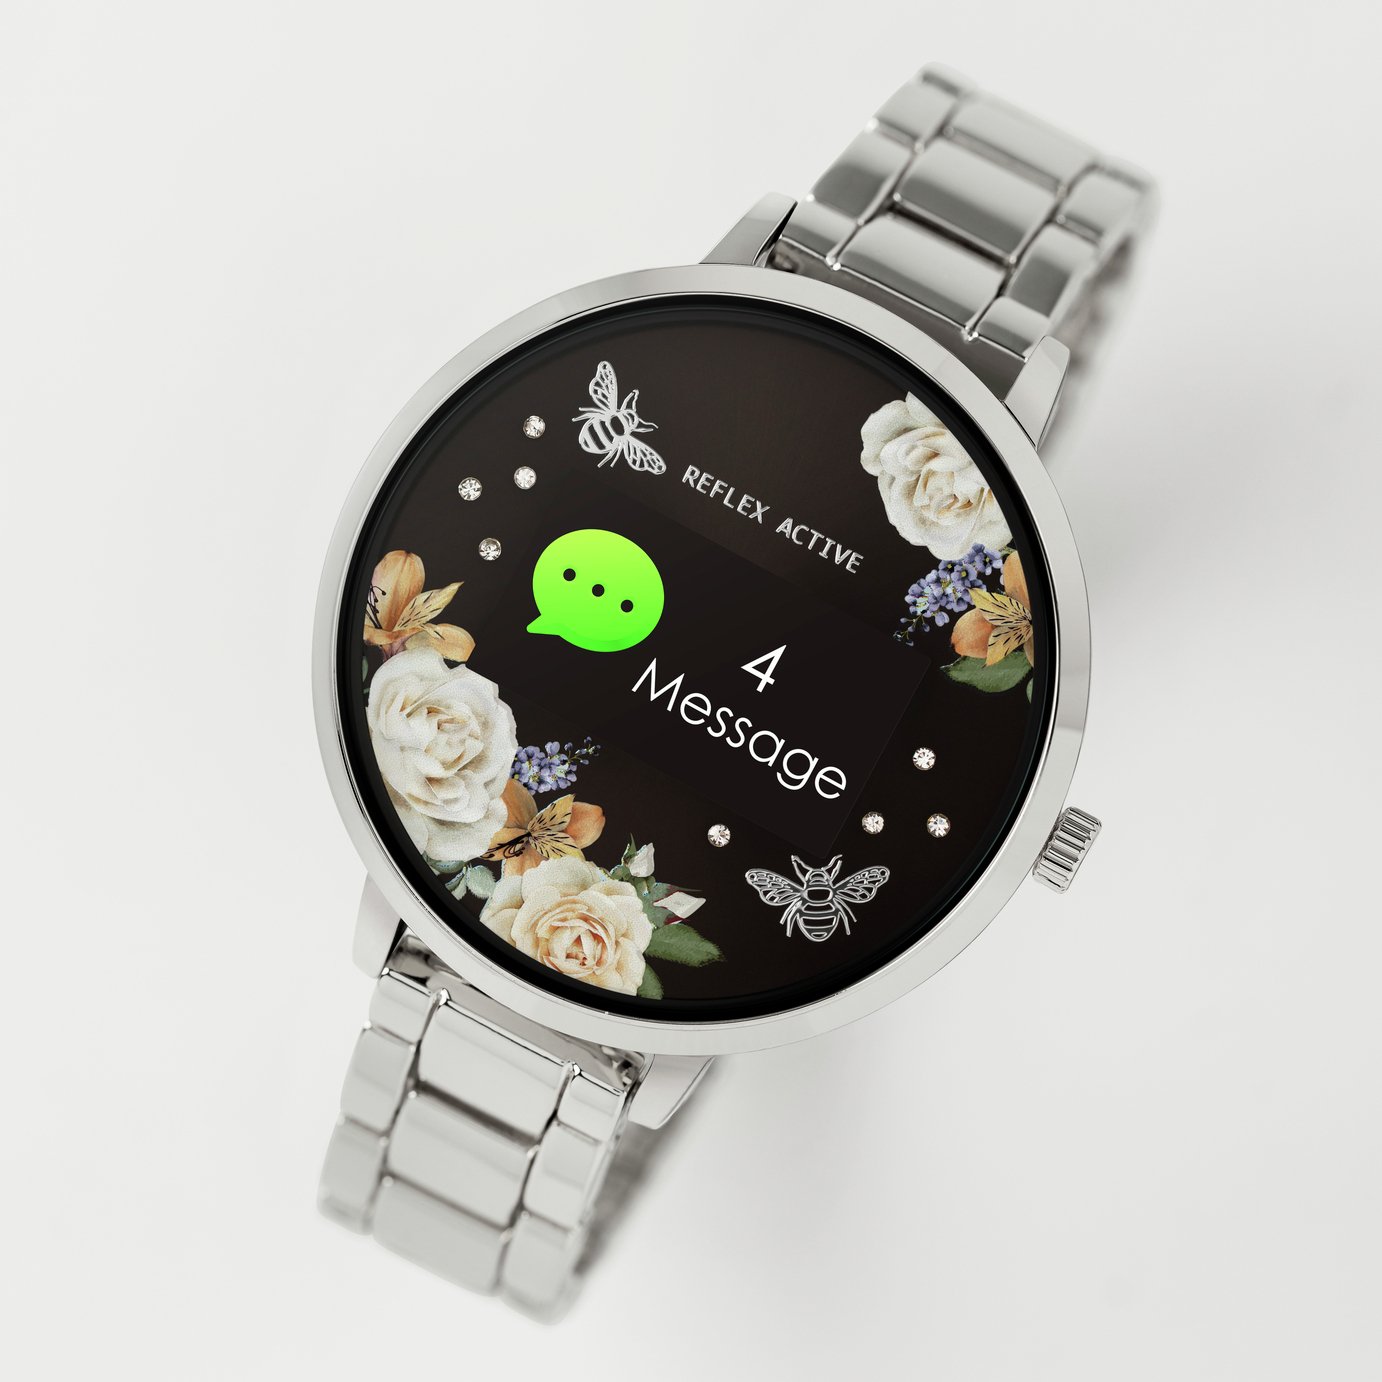 Reflex Active Smart Watch Silver Bracelet Review